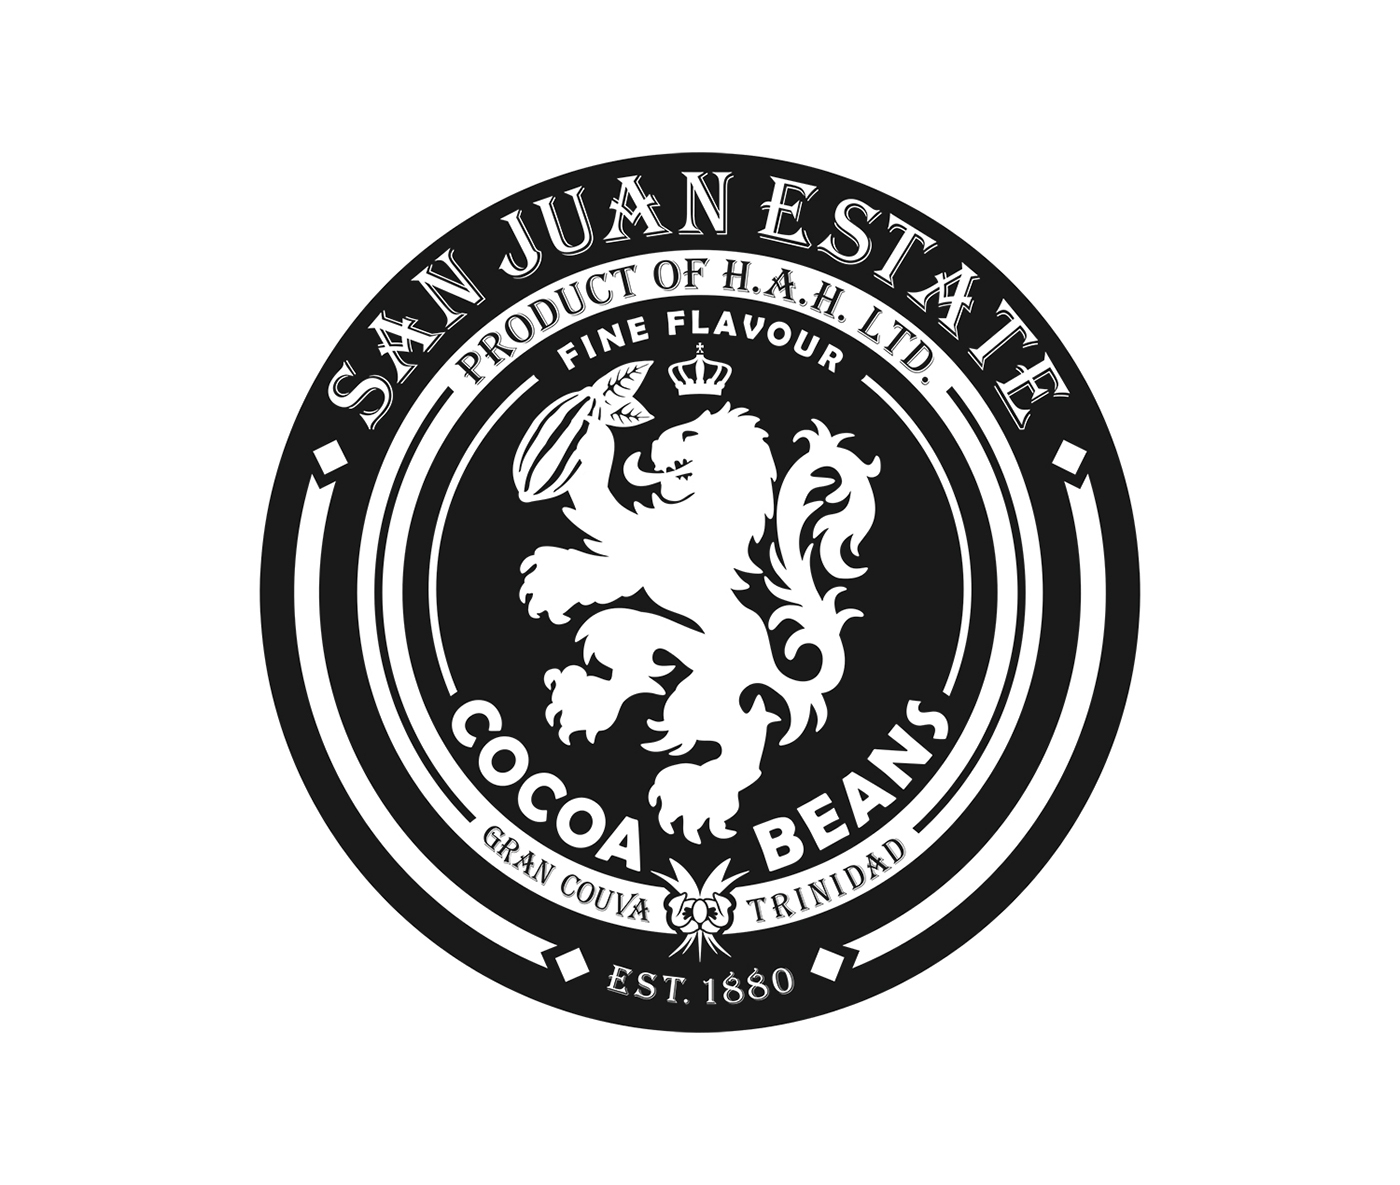 San Juan Cocoa Trinidad dutch